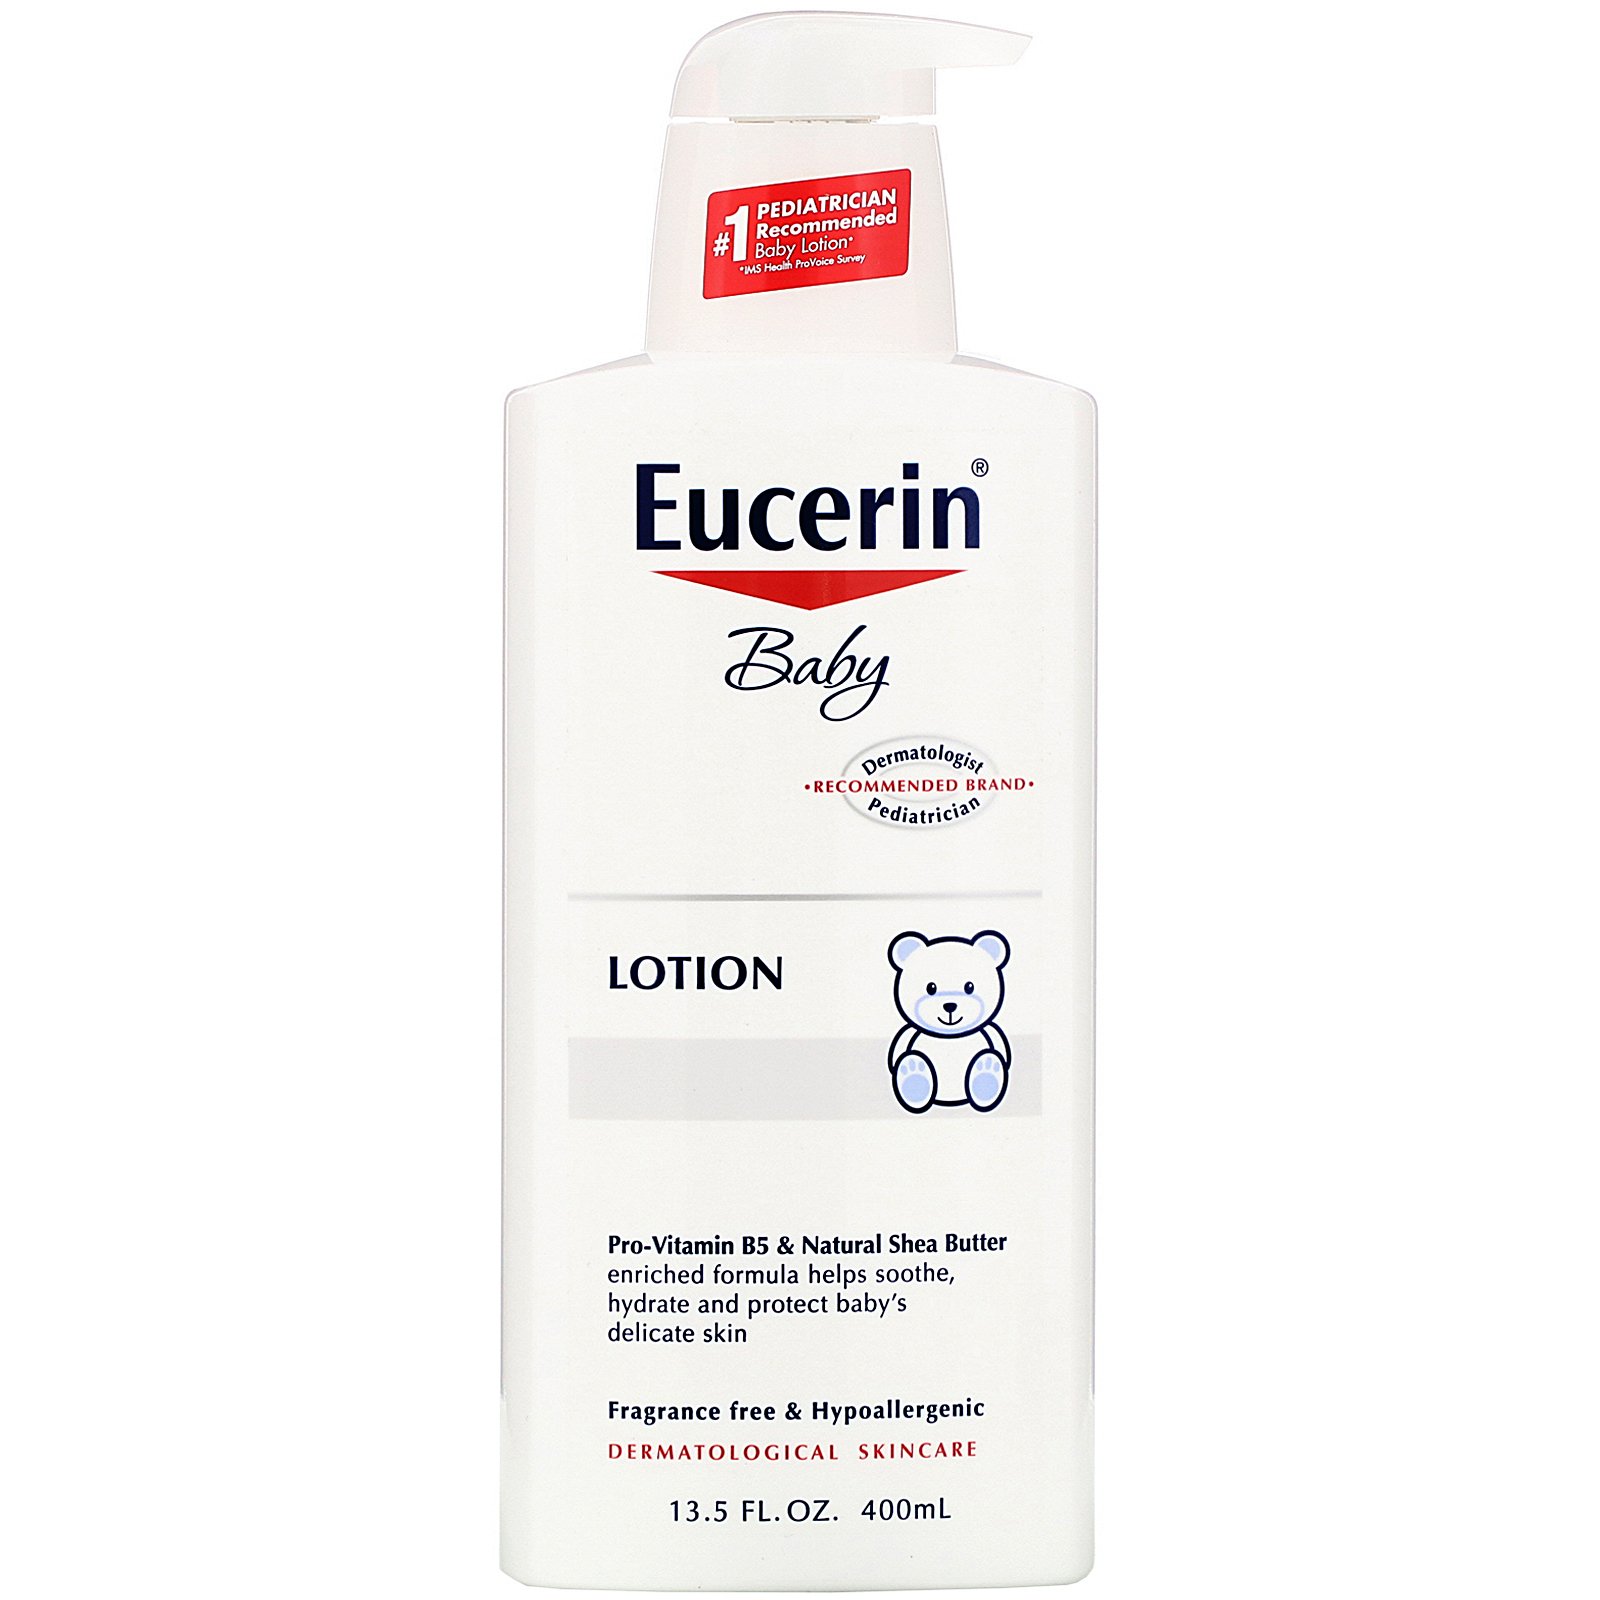 eucerin baby face cream